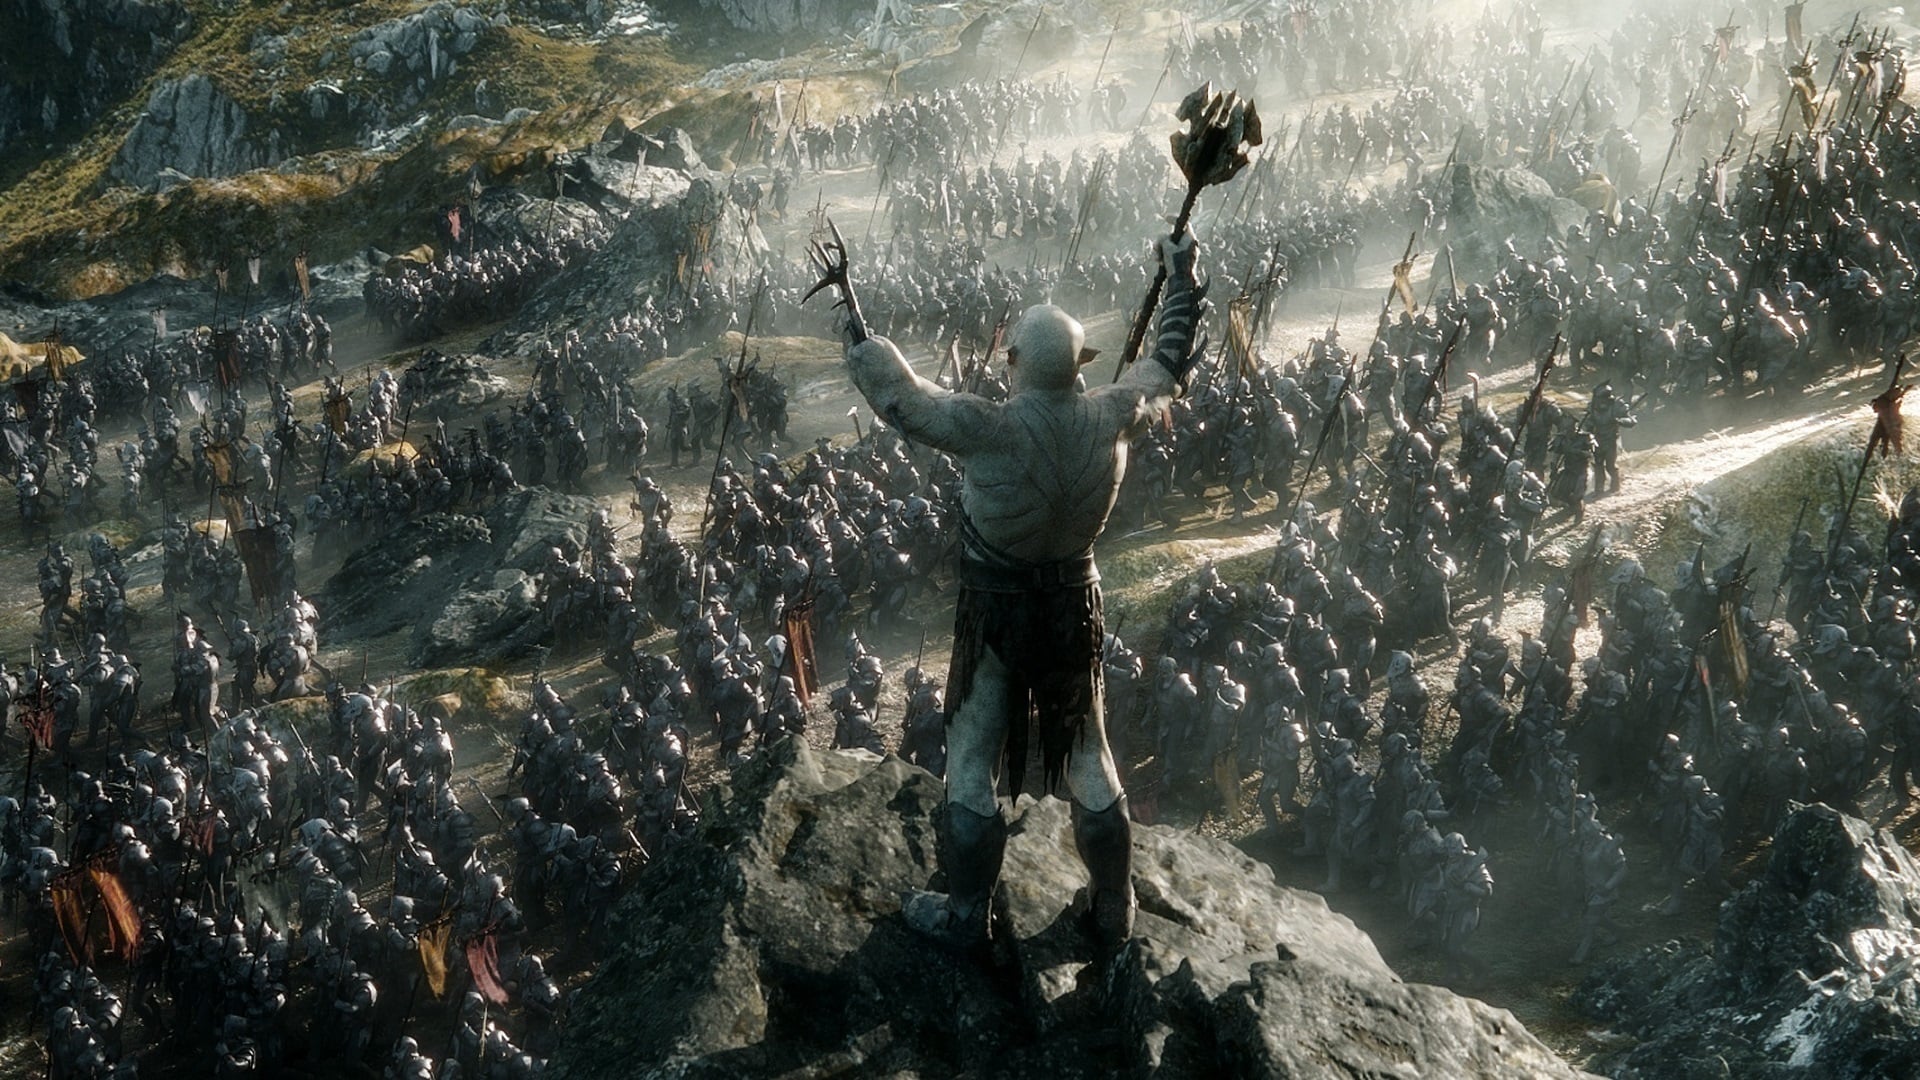 The Hobbit: The Battle of the Five Armies backdrop